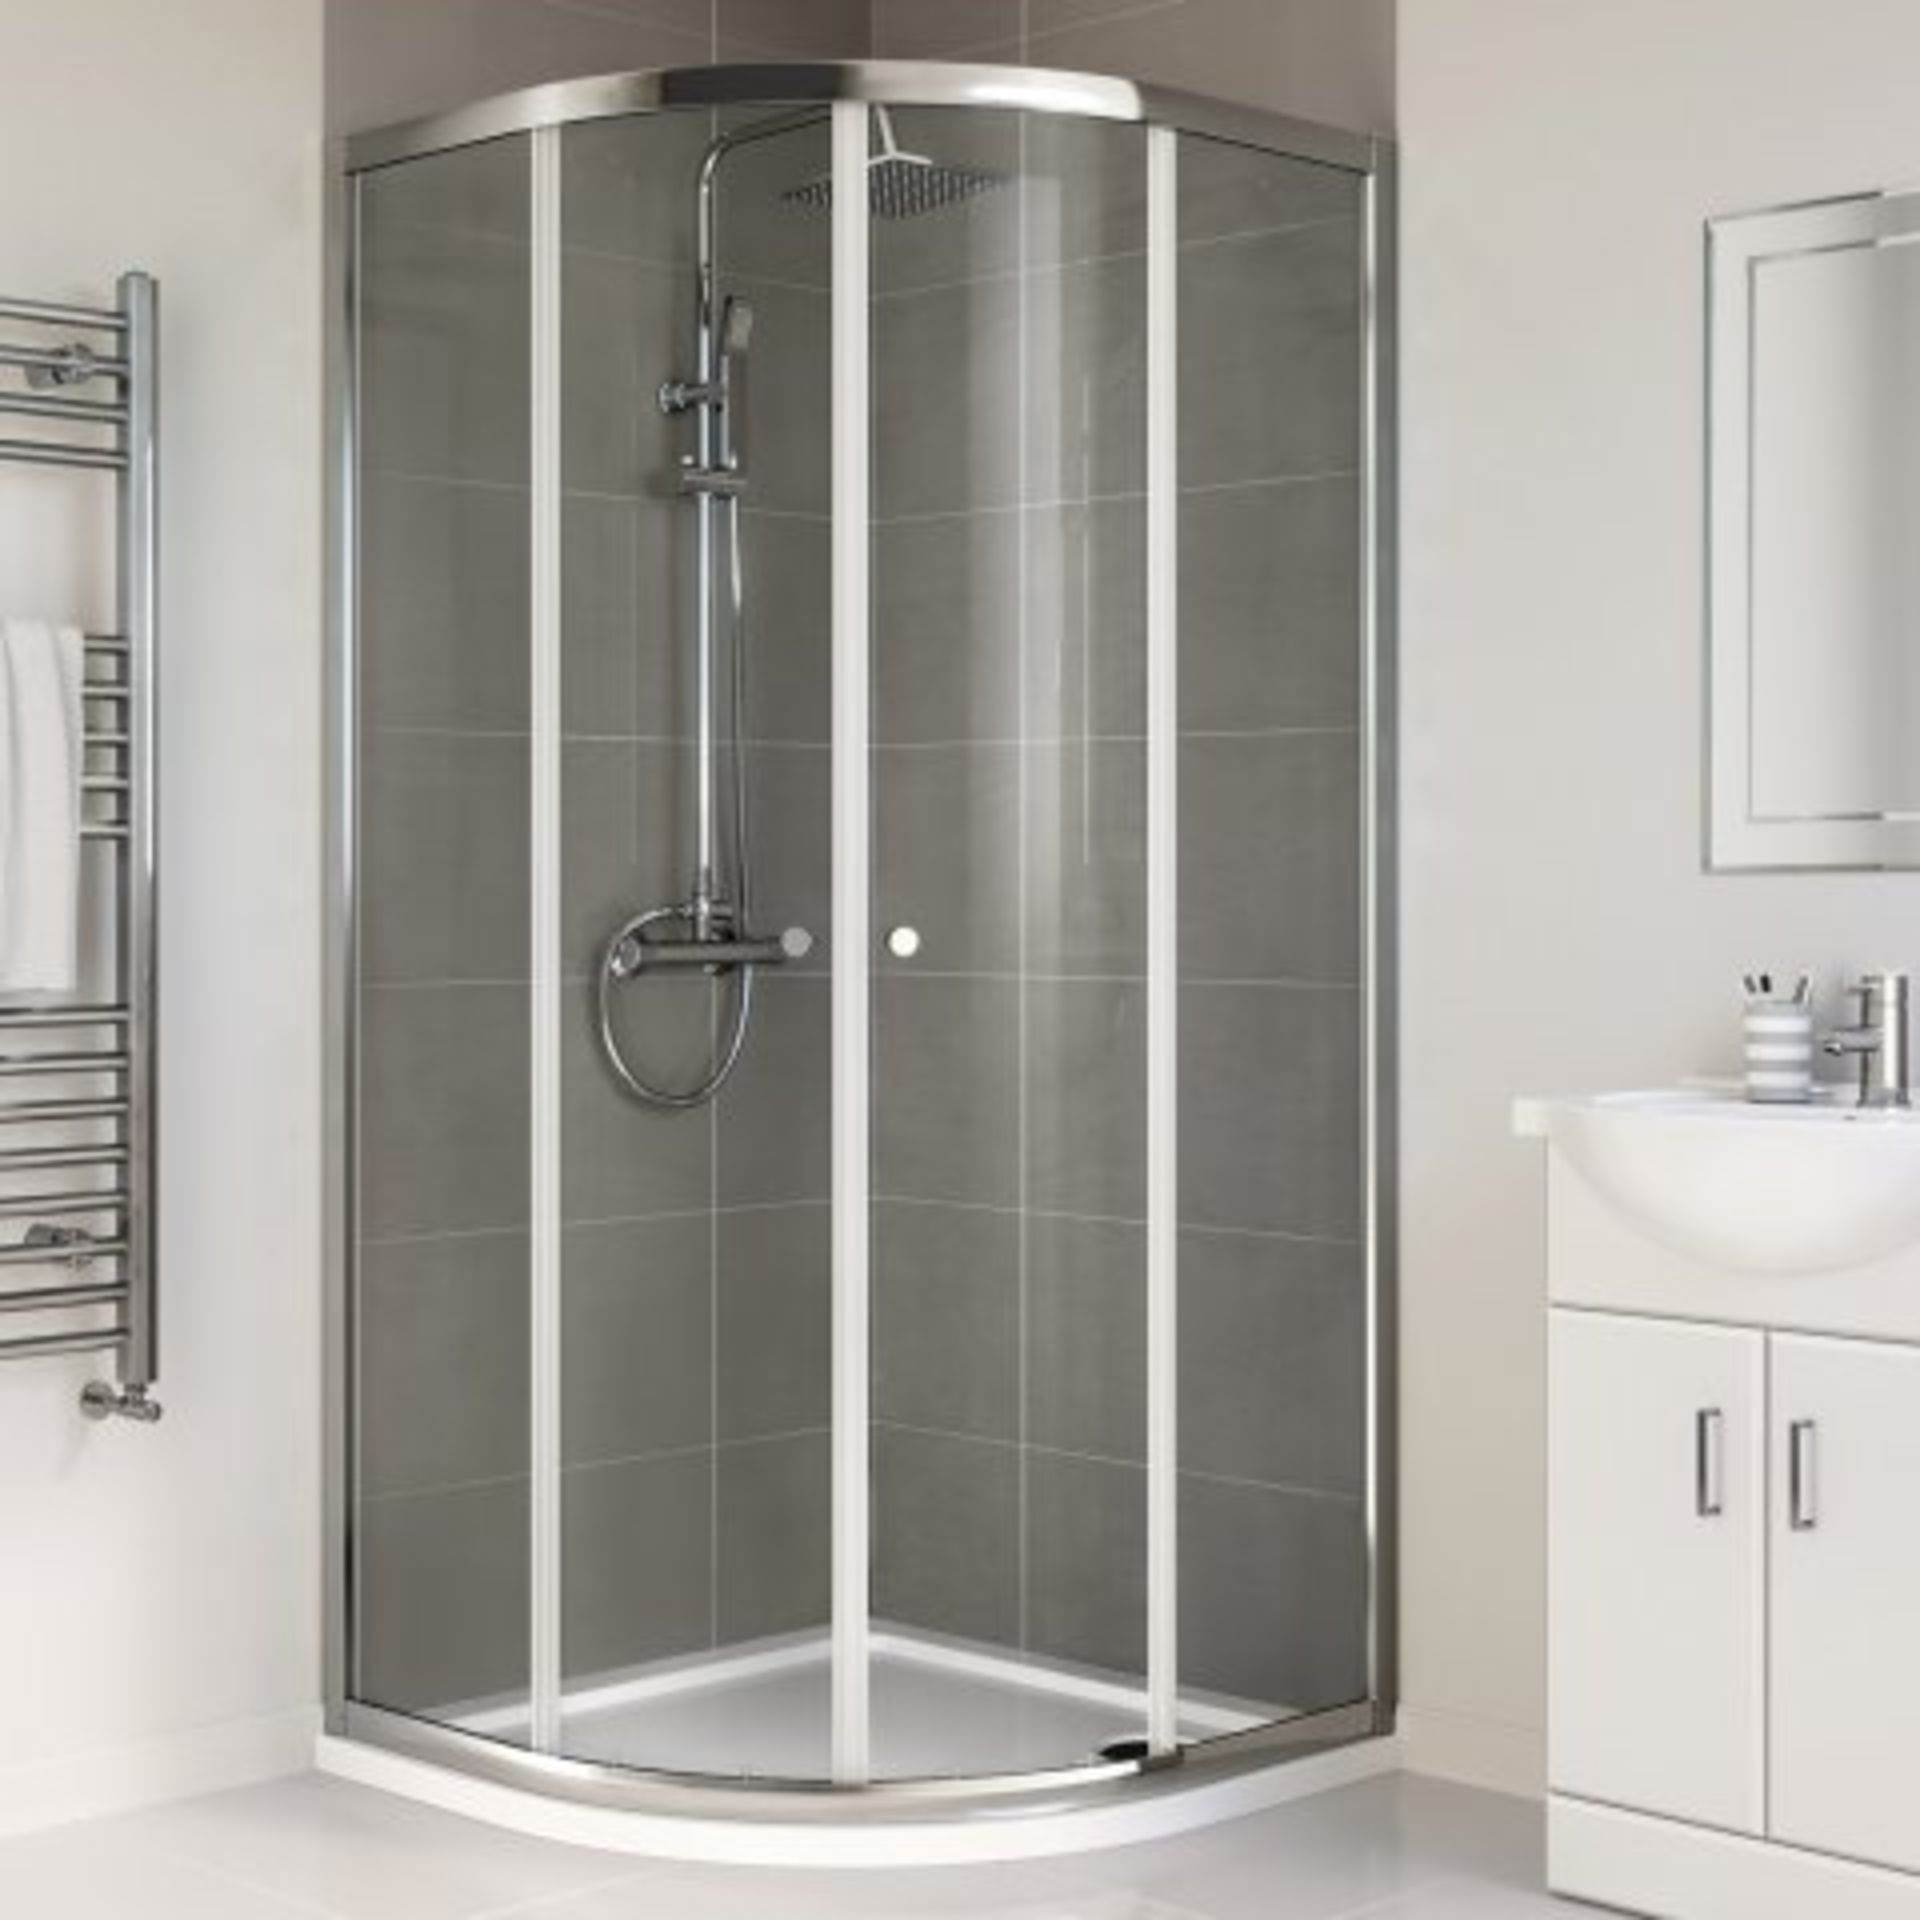 NEW (NS102) 900x900mm - Elements Quadrant Shower Enclosure. RRP £429.99. Budget Solution Our e...